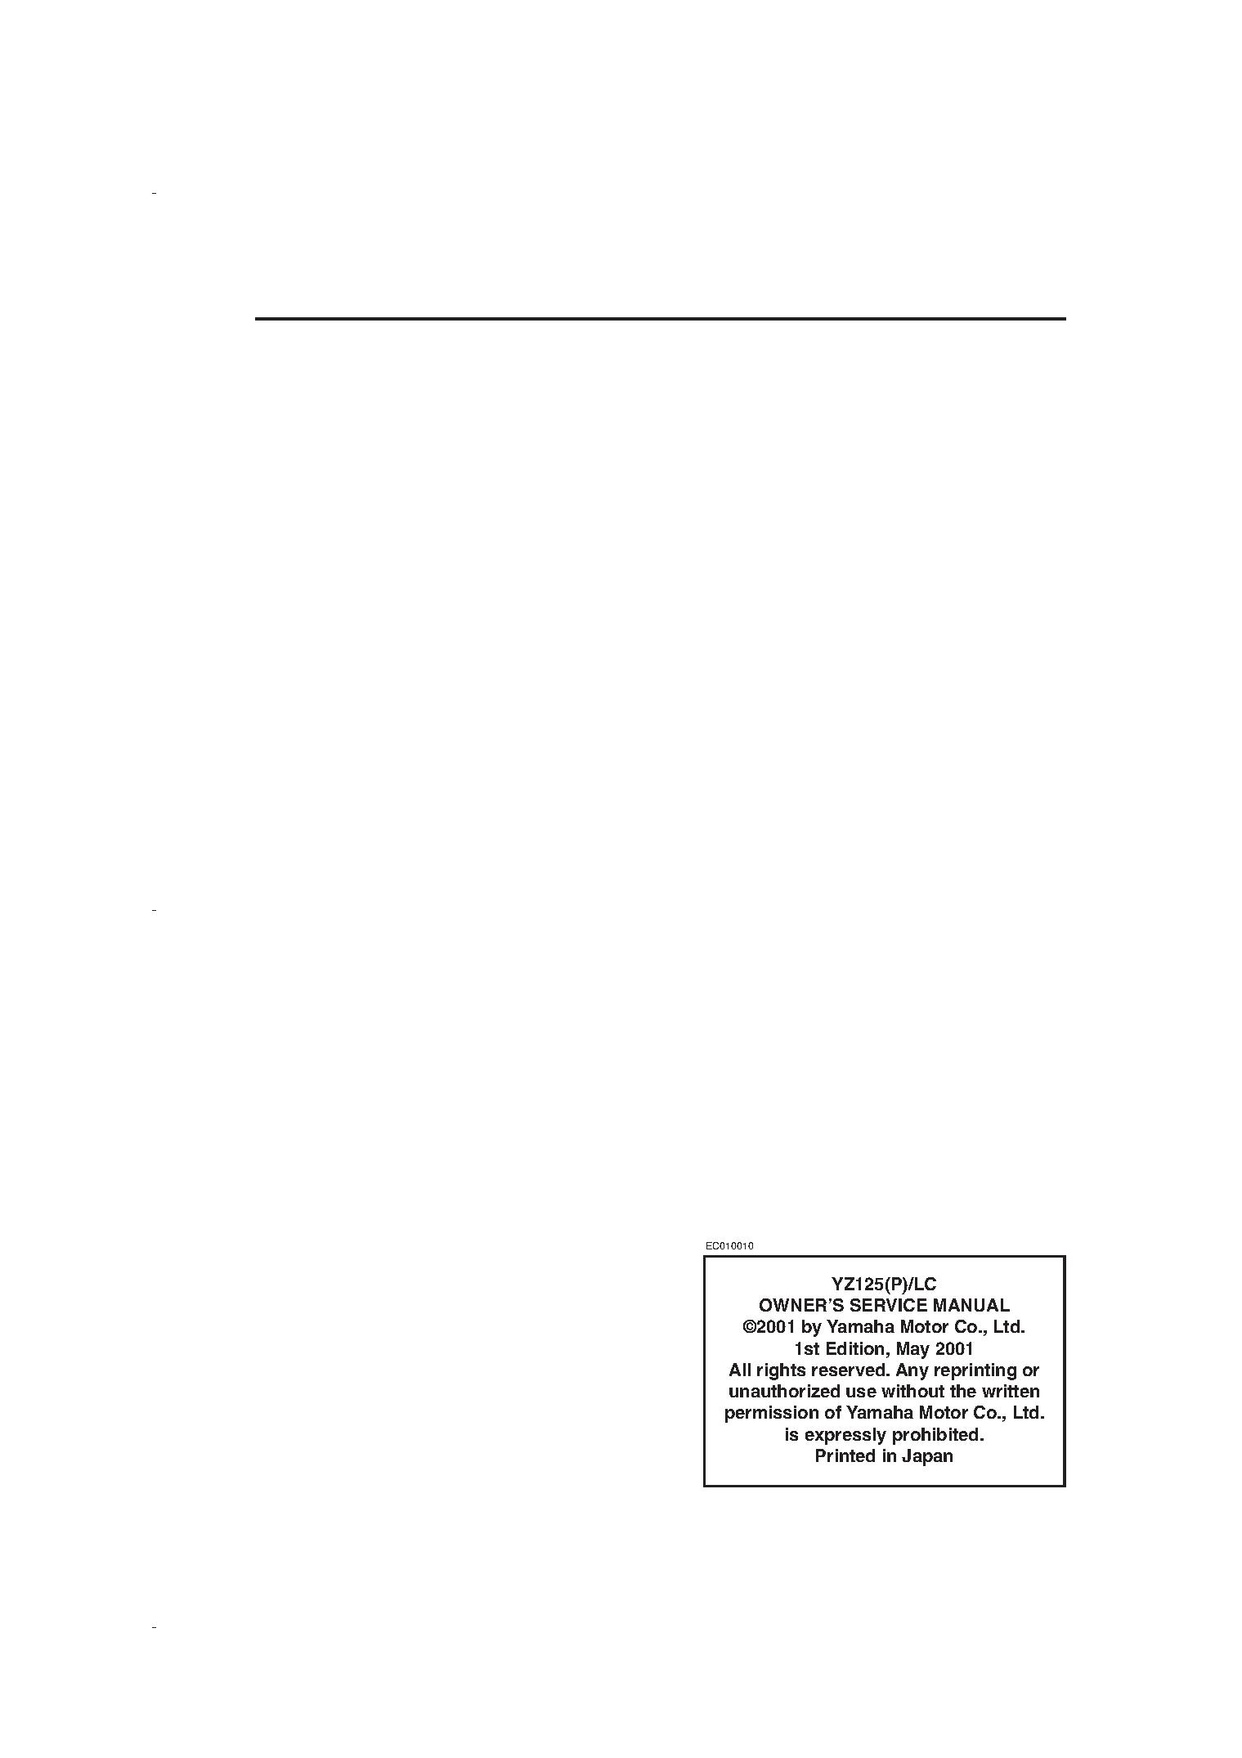 File:2002 Yamaha YZ125 (P) LC Owners Service Manual.pdf